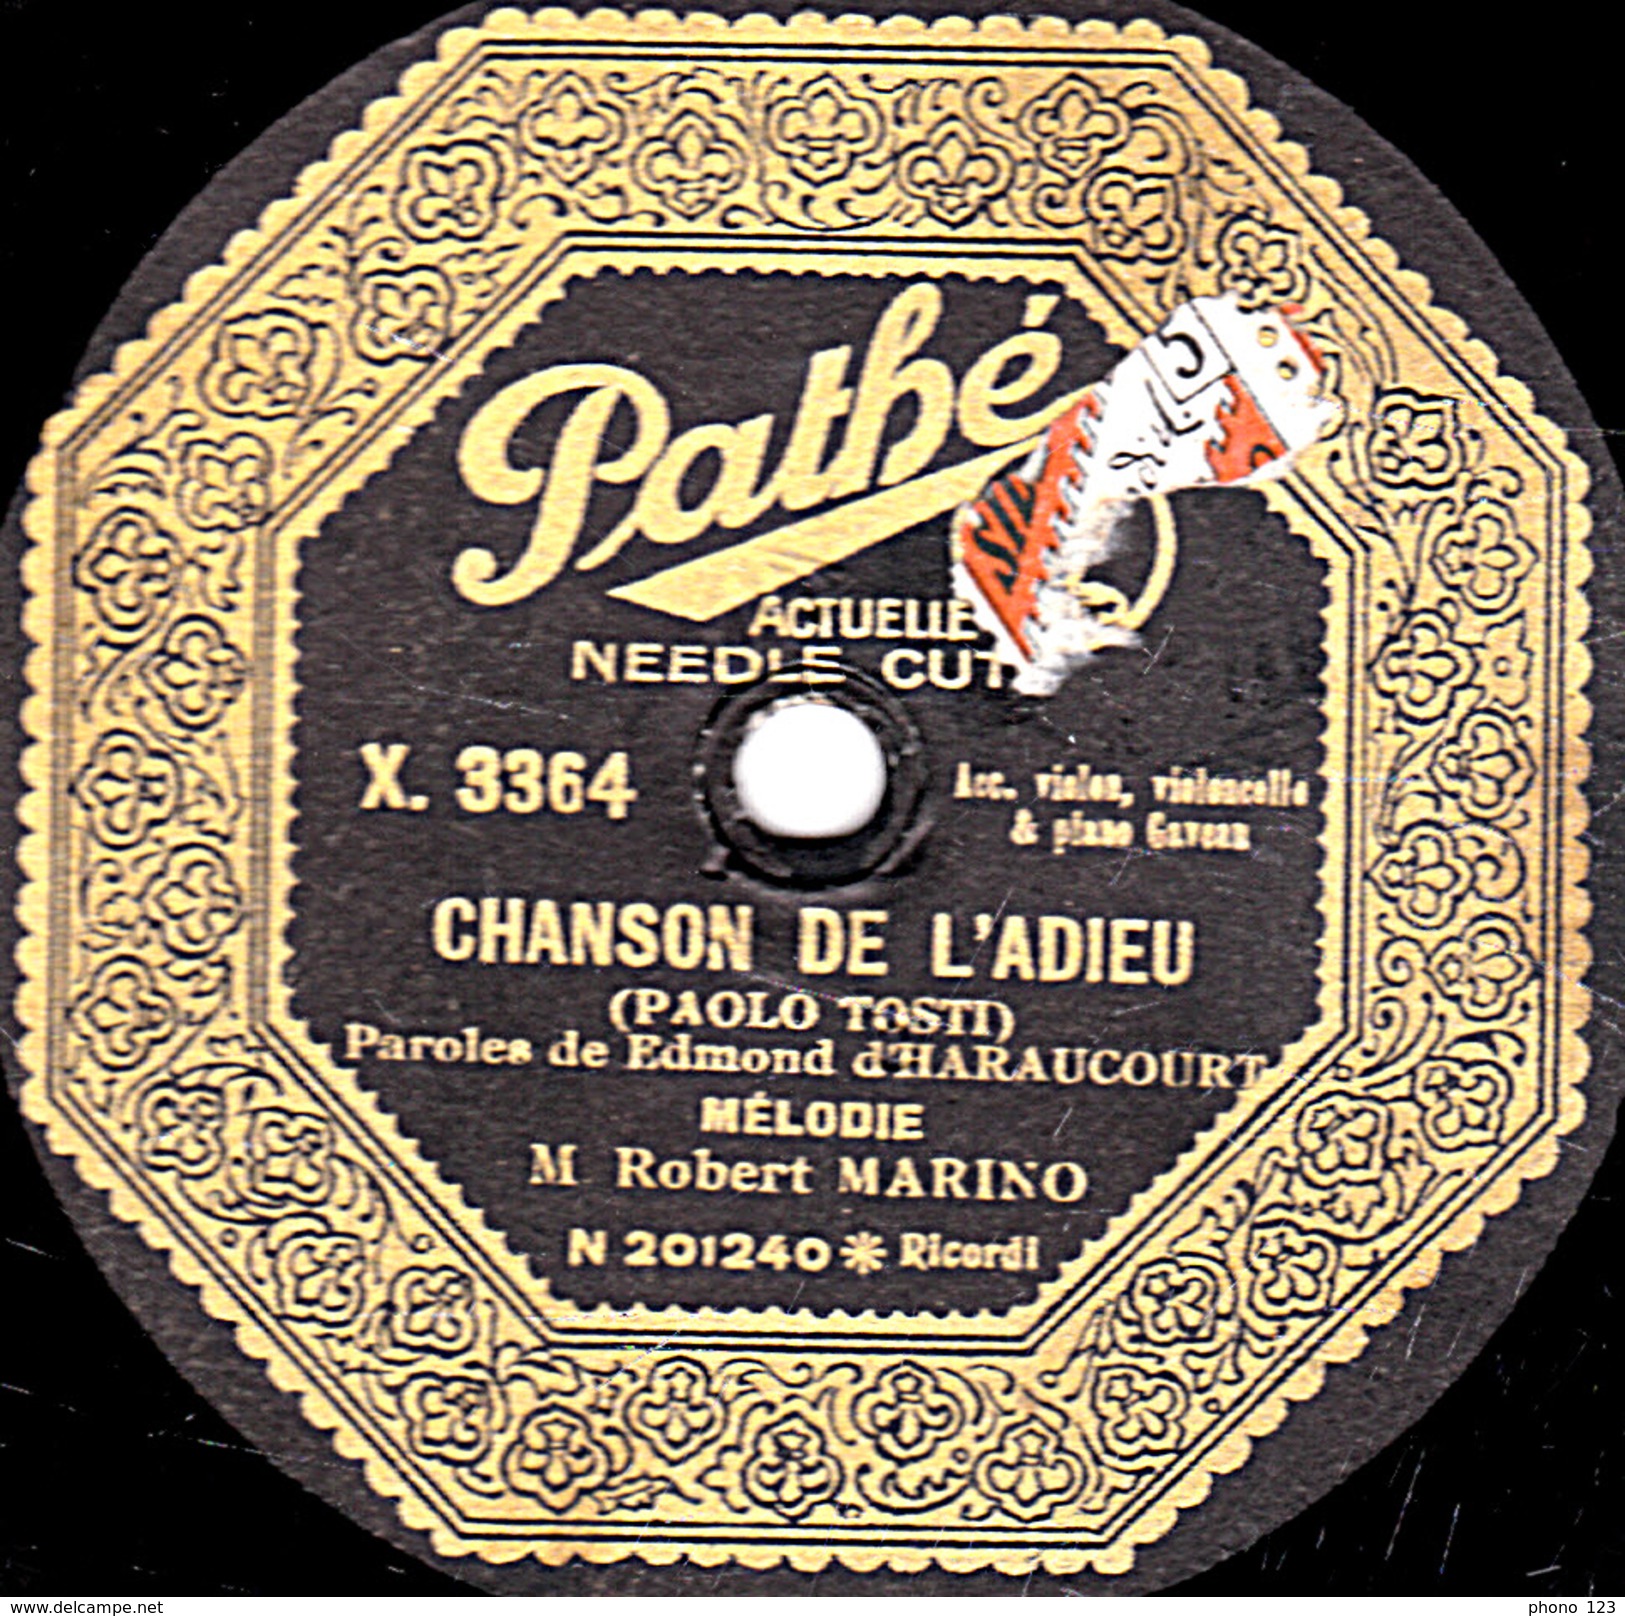 78 T. - 25 Cm - état  B - Robert MARINO - SERENADE DU PASSANT - CHANSON DE L'ADIEU - 78 T - Disques Pour Gramophone